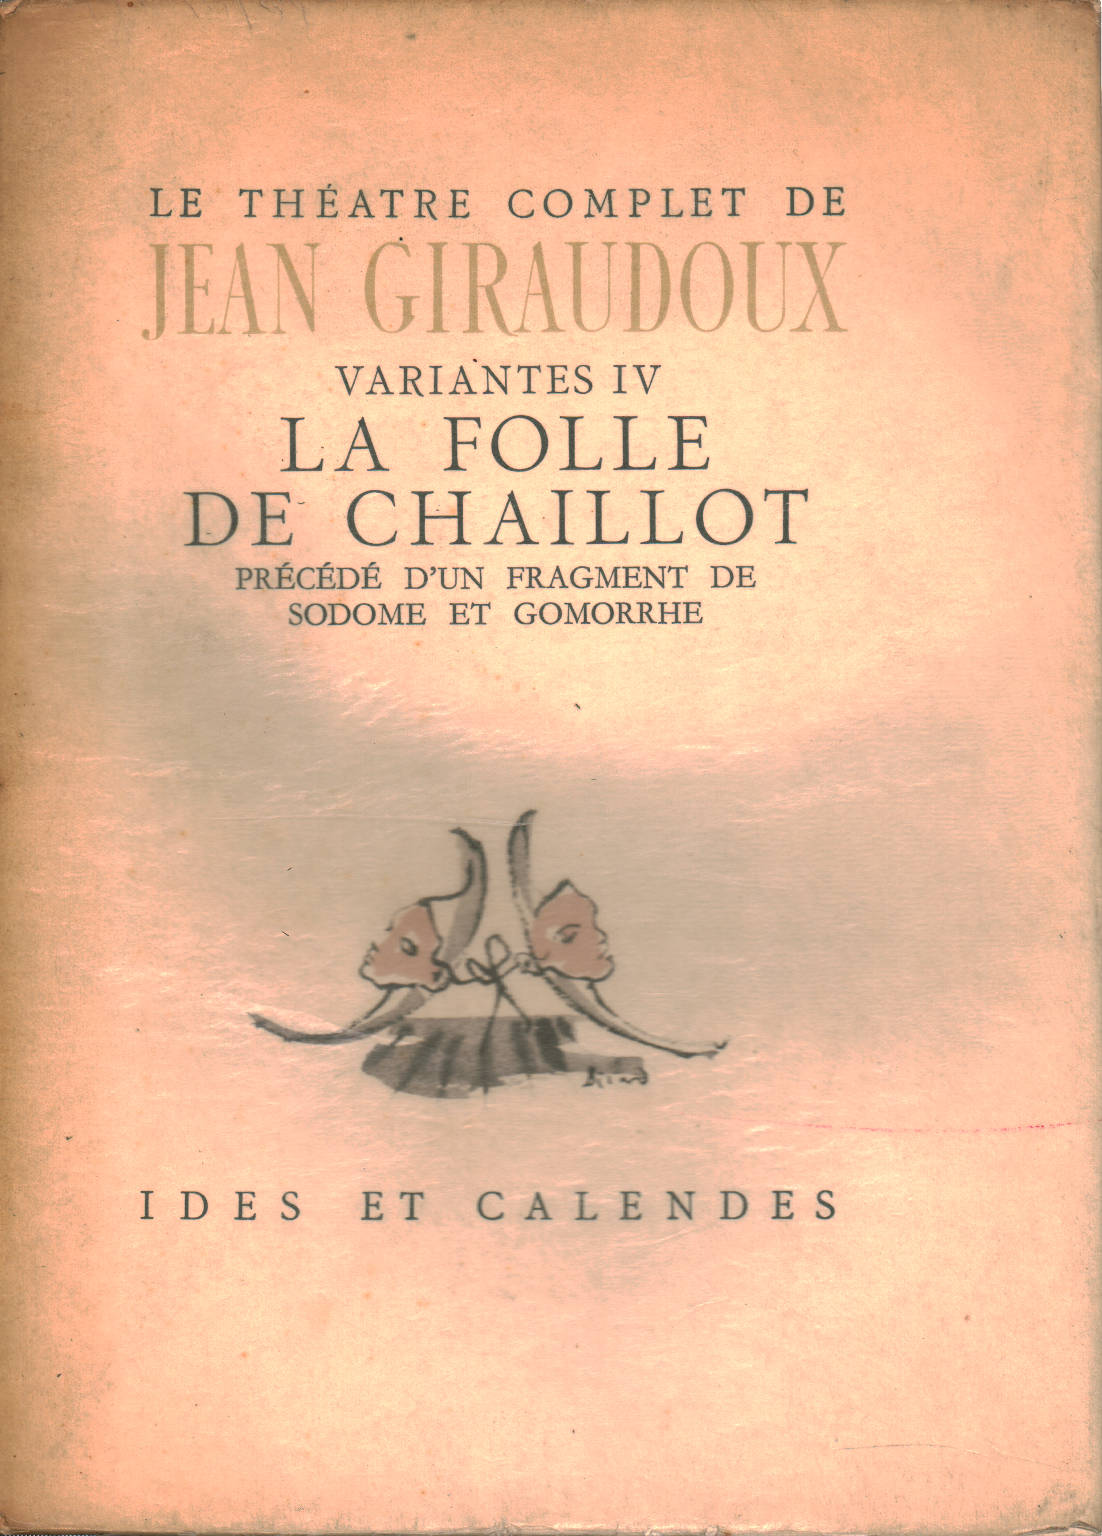 Le théatre complet de Jean Giraudoux Variantes IV, Jean Giraudoux